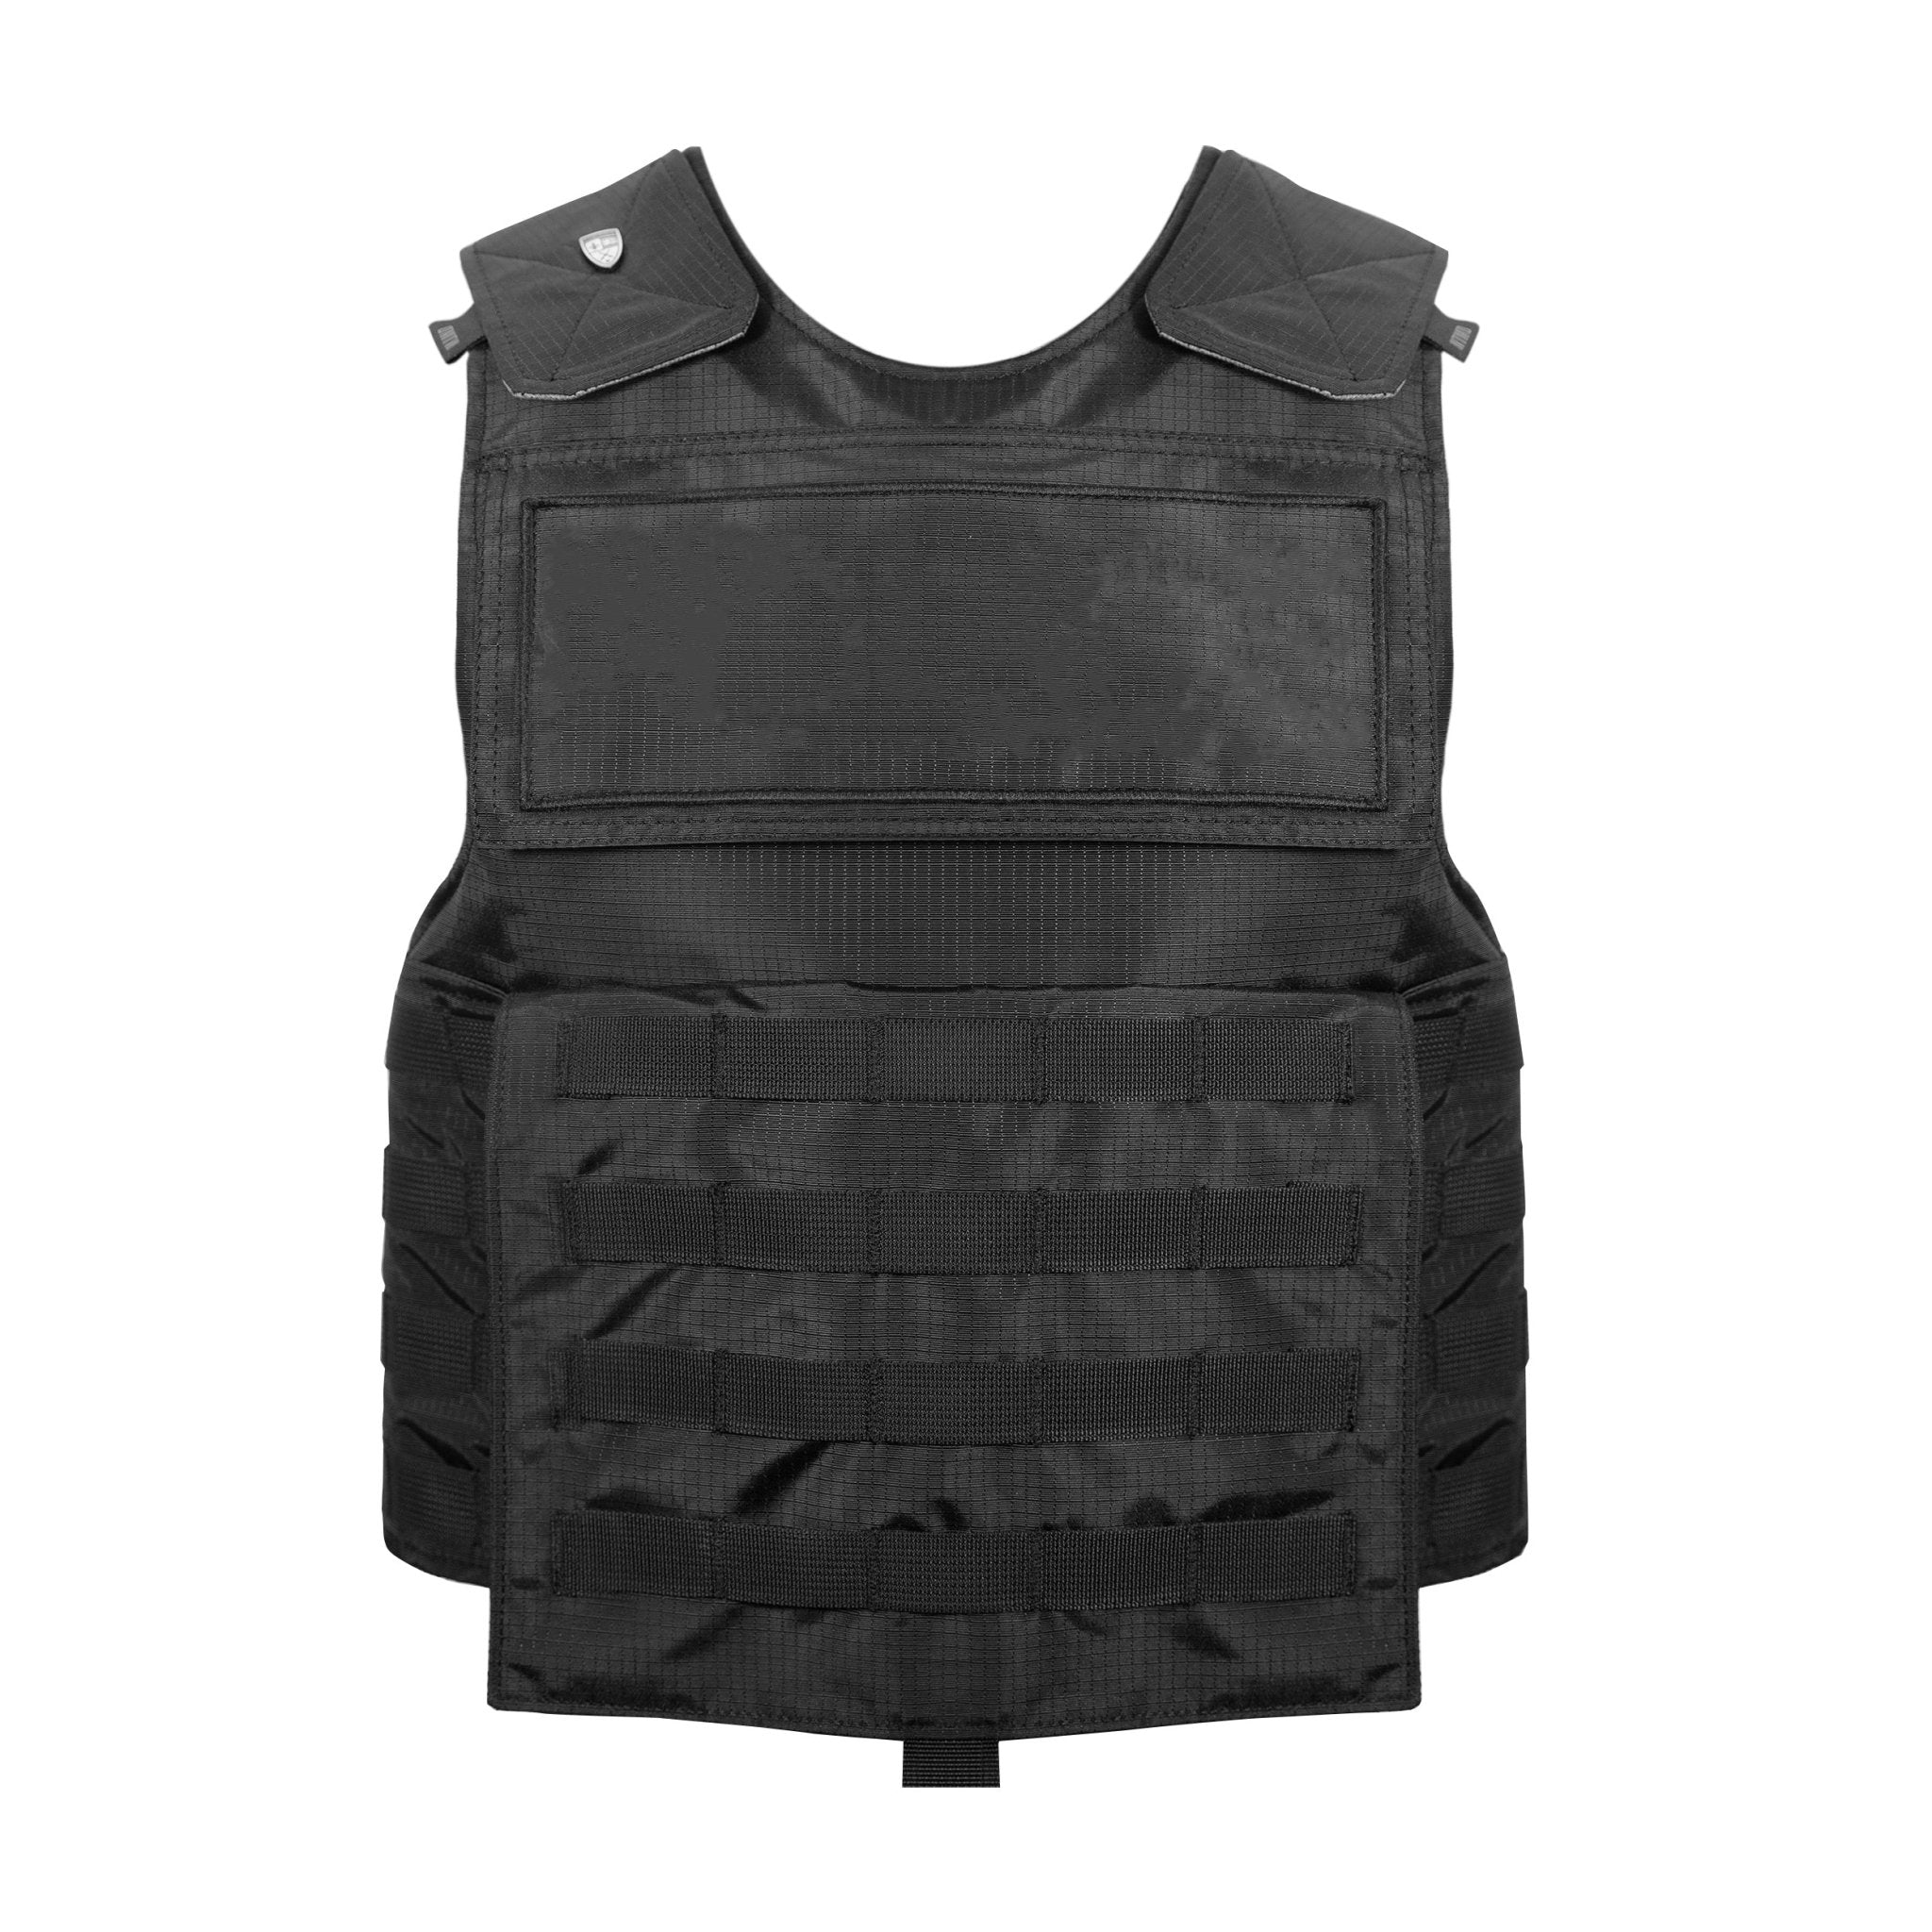 Hunting Airsoft Paintball Genuine Men's Tactical Vest Bulletproof